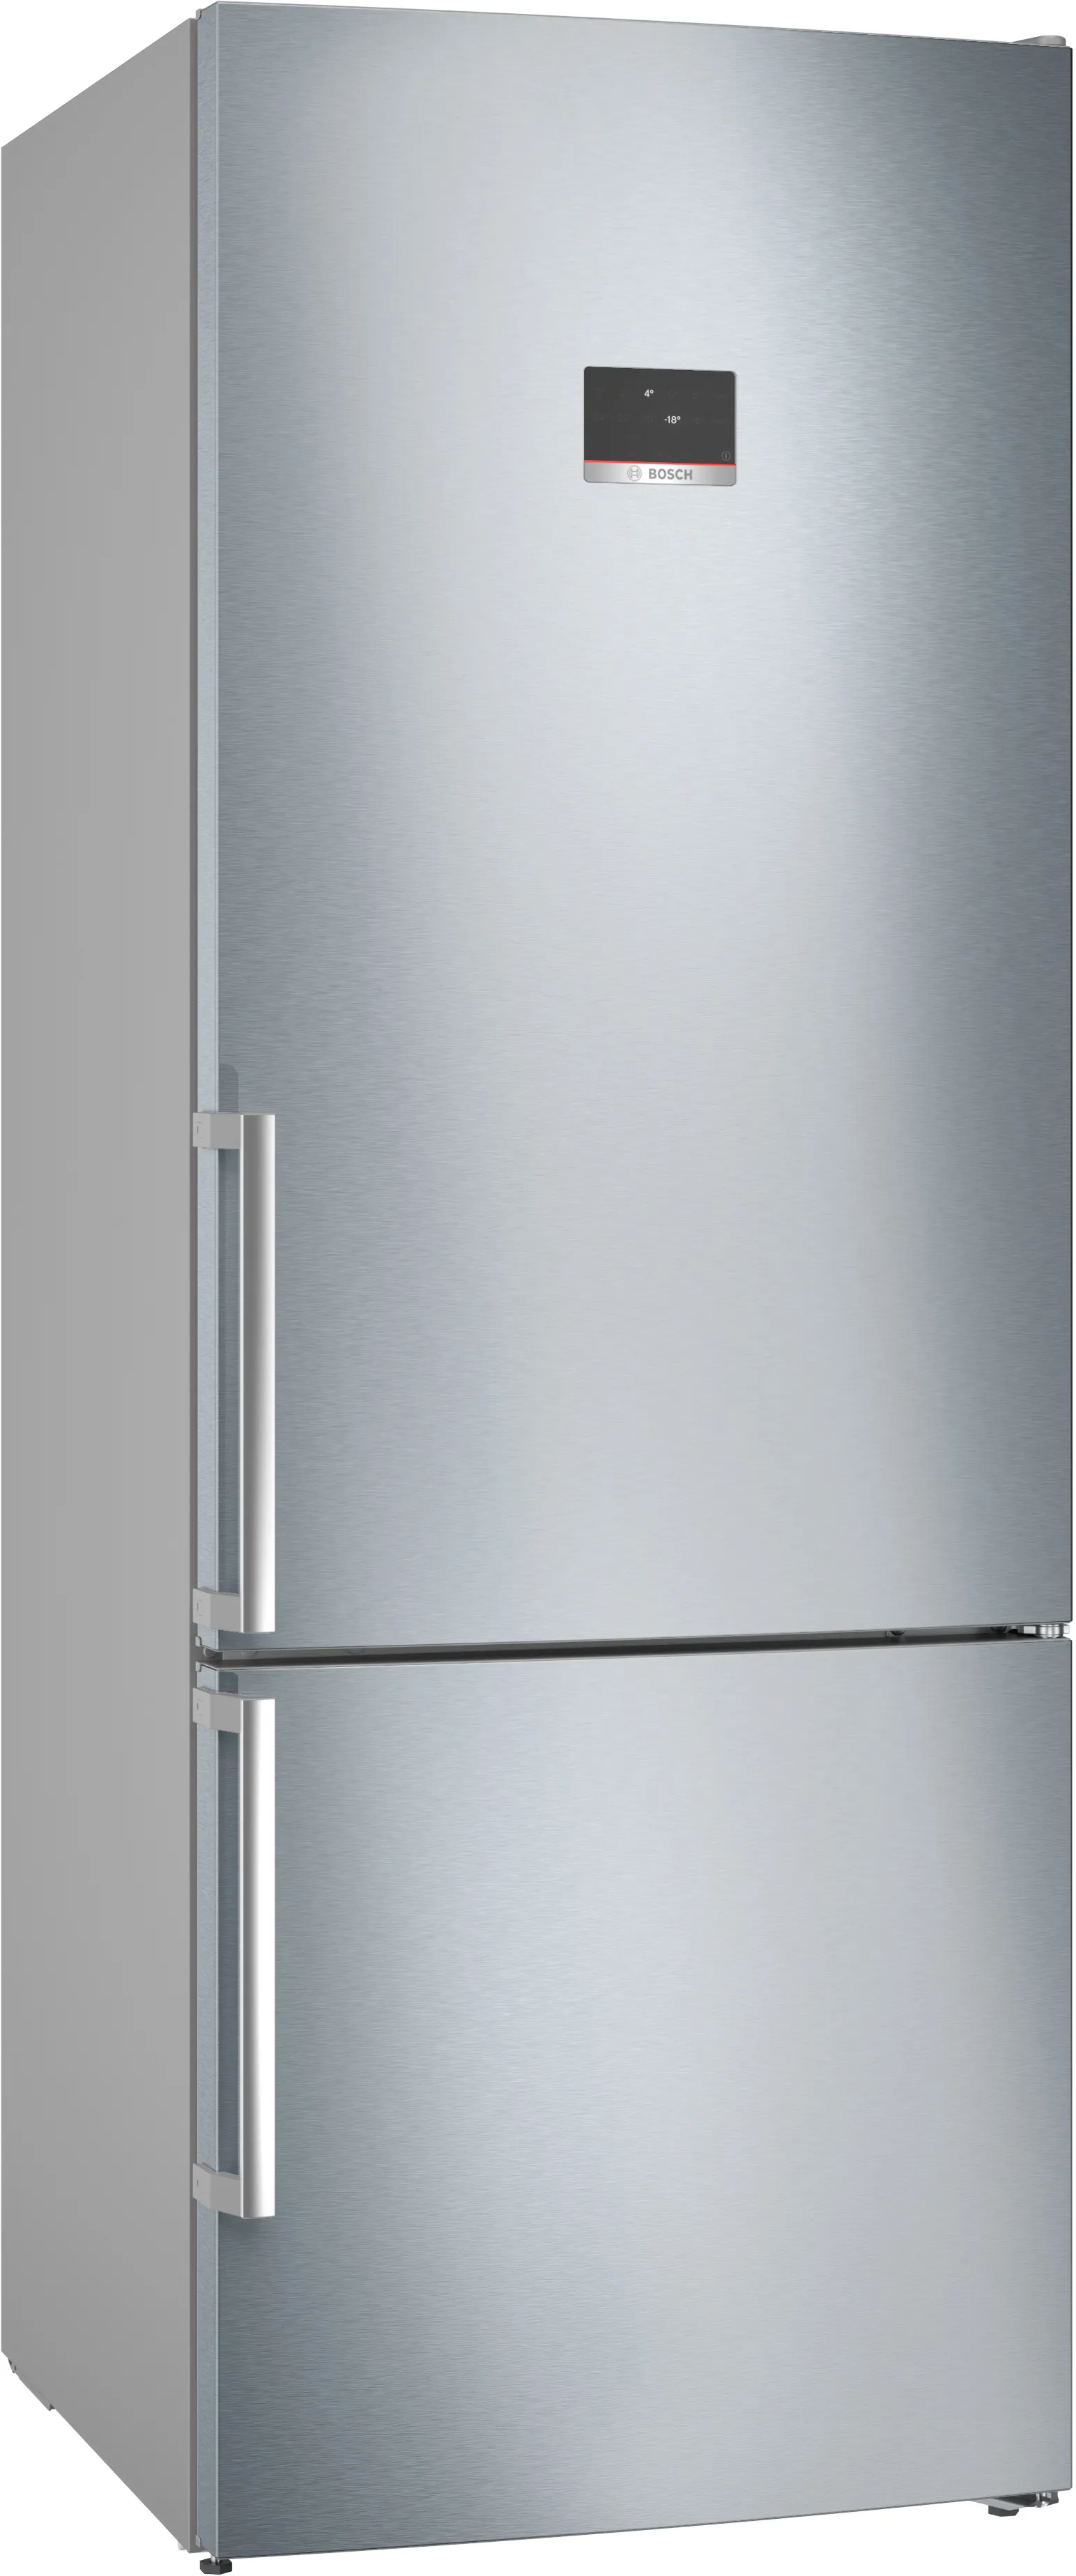 Series 4 Freestanding Refrigerator with Bottom Freezer 193 x 70 cm Stainless steel (with anti-fingerprint) 